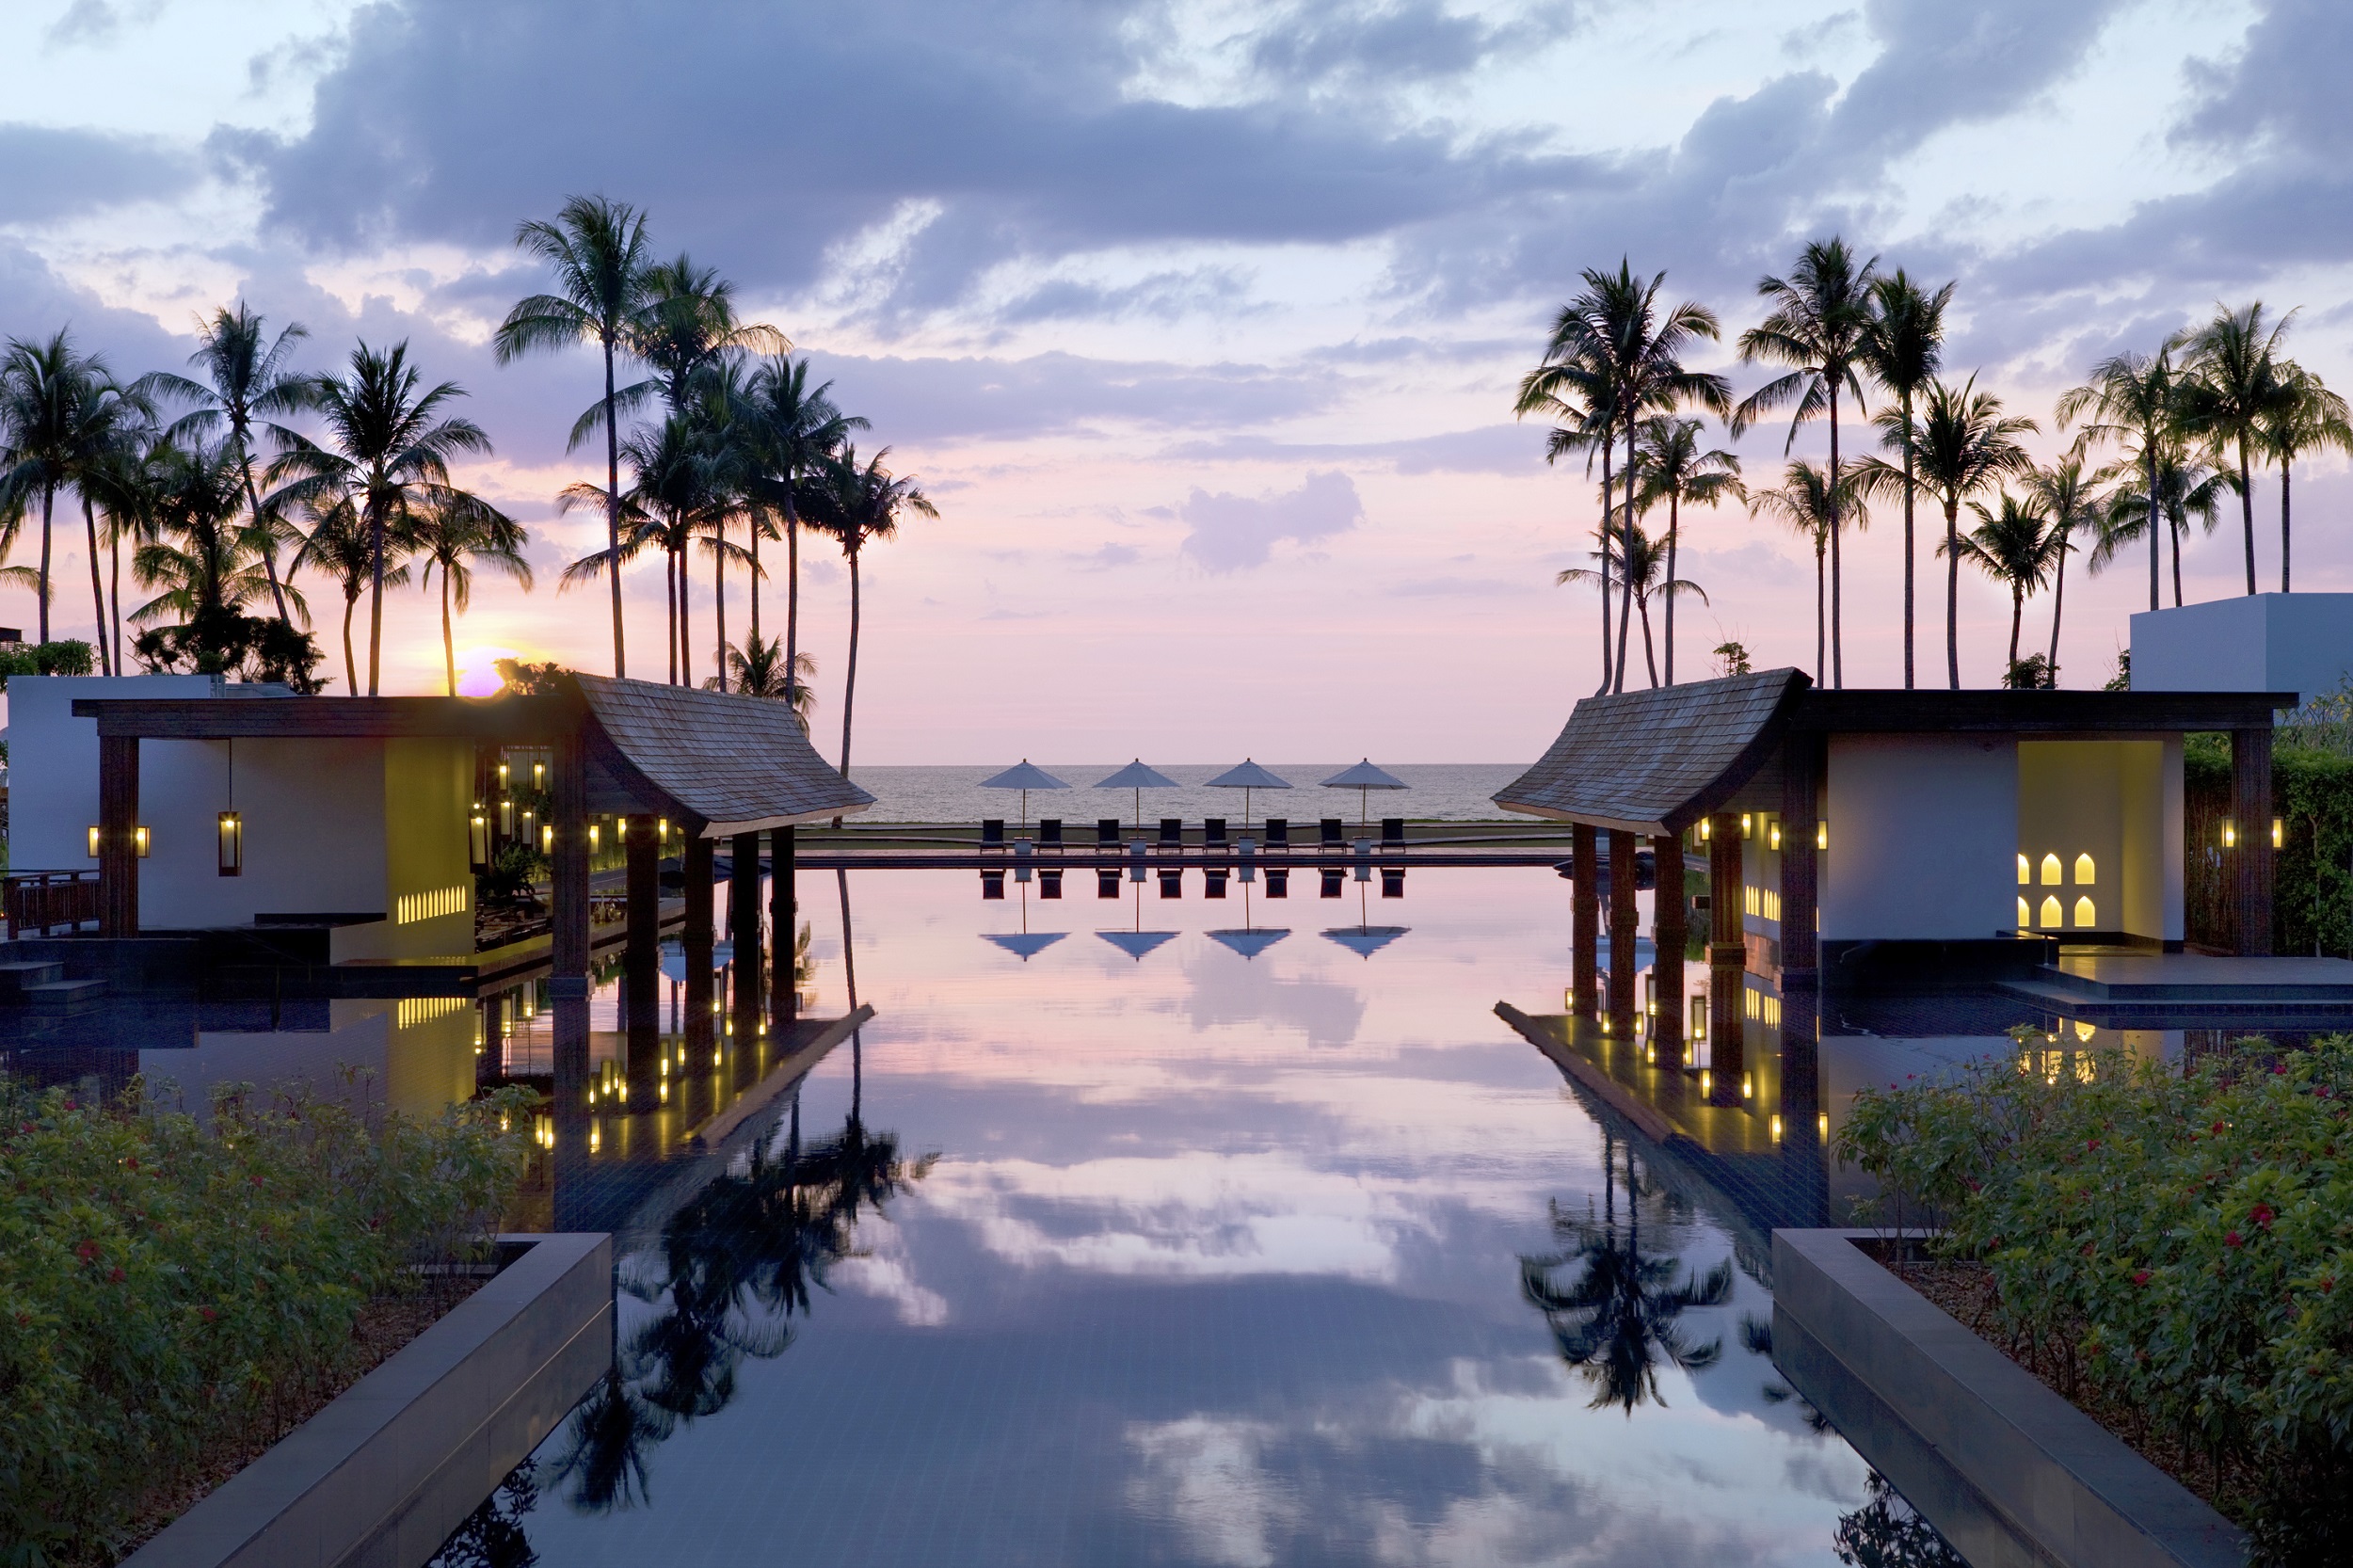 JW Marriott Khao Lak Resort & Spa - Sunset at Infinity Pool